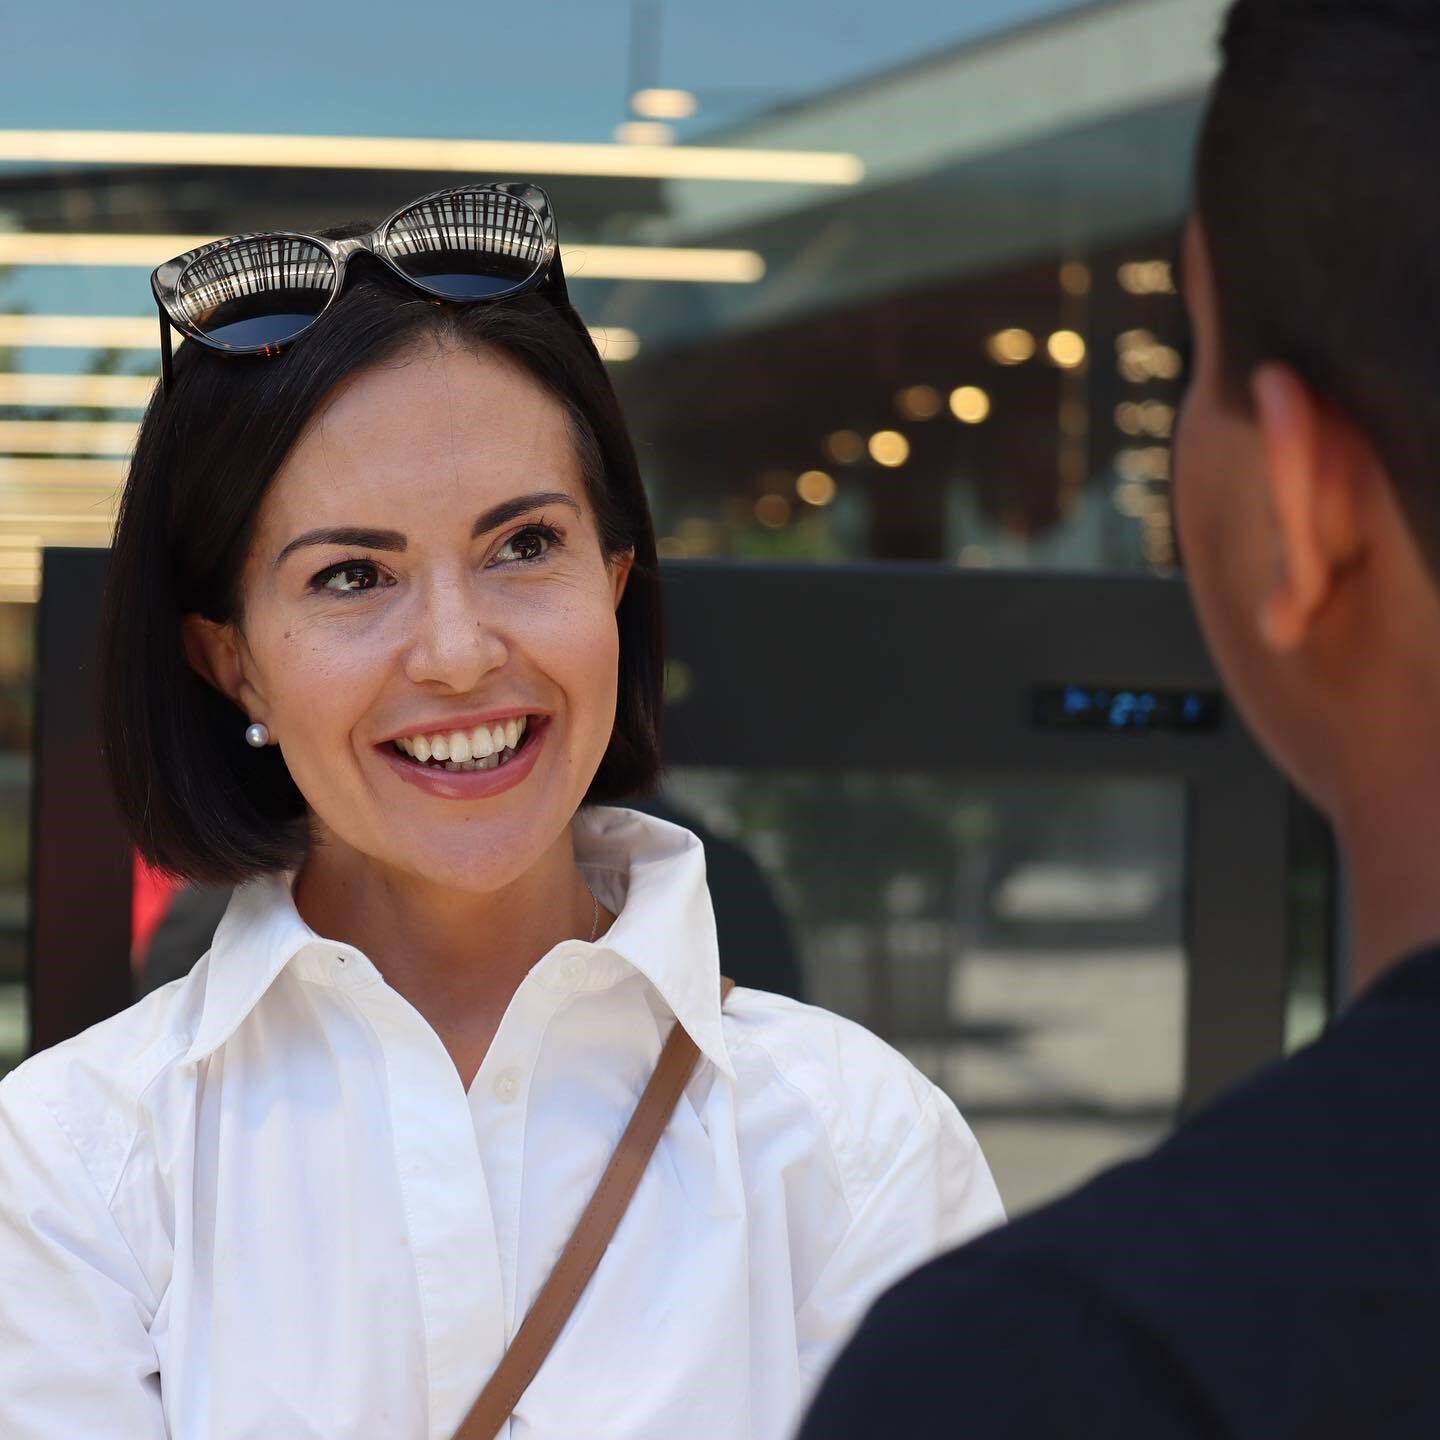 Woman in white shirt smiles while talking